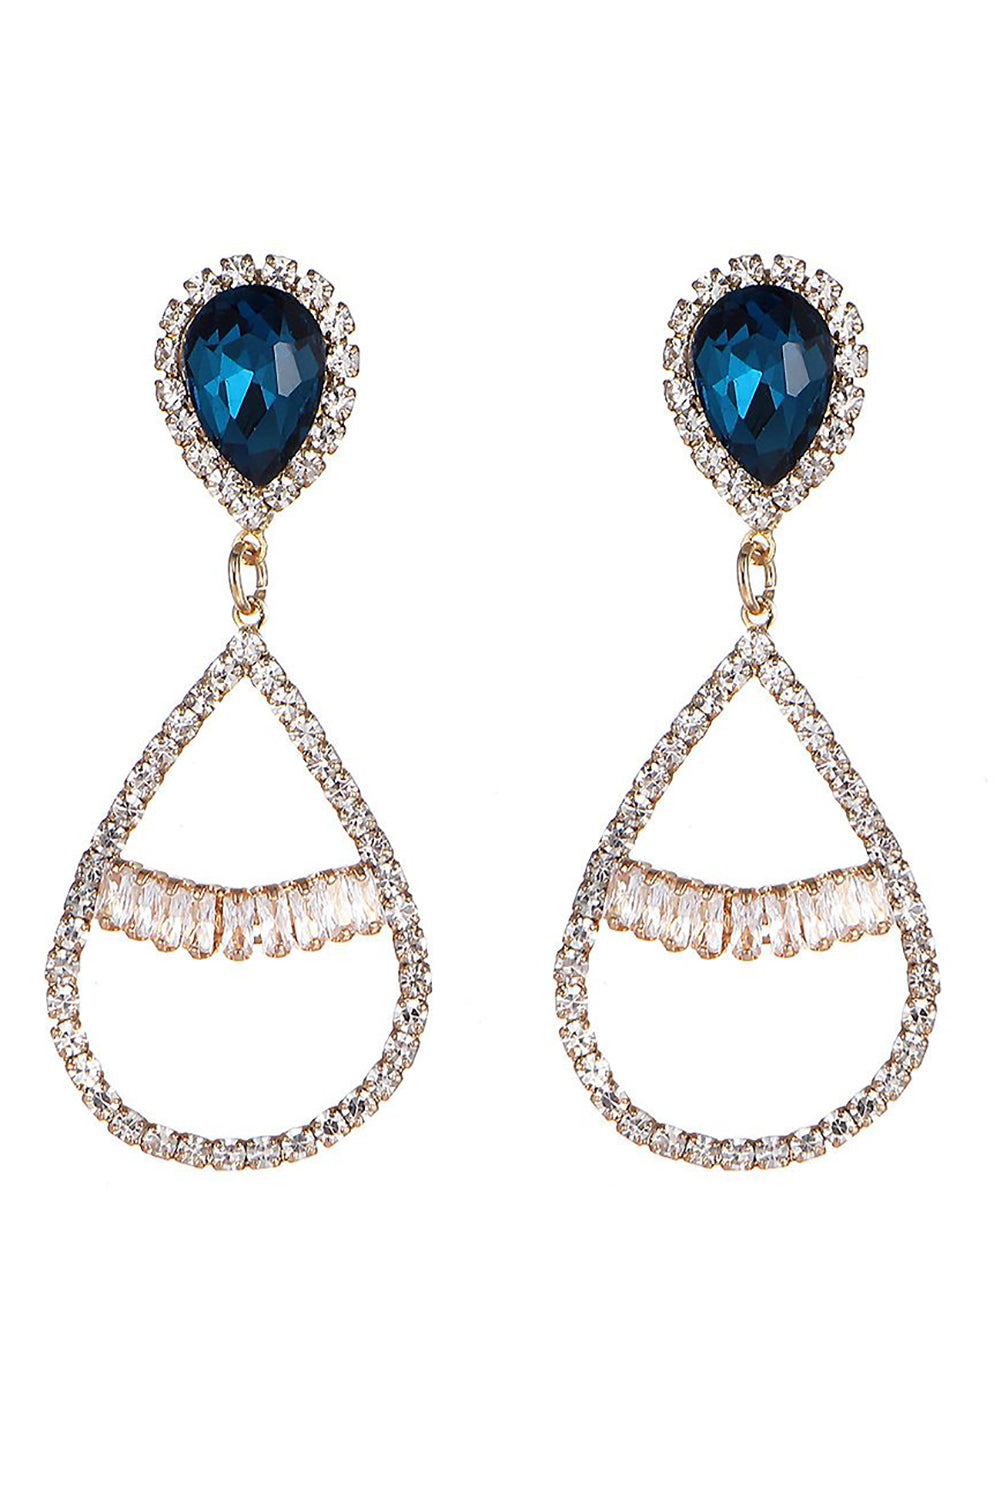 Royal Blue Beaded Wedding Earrings